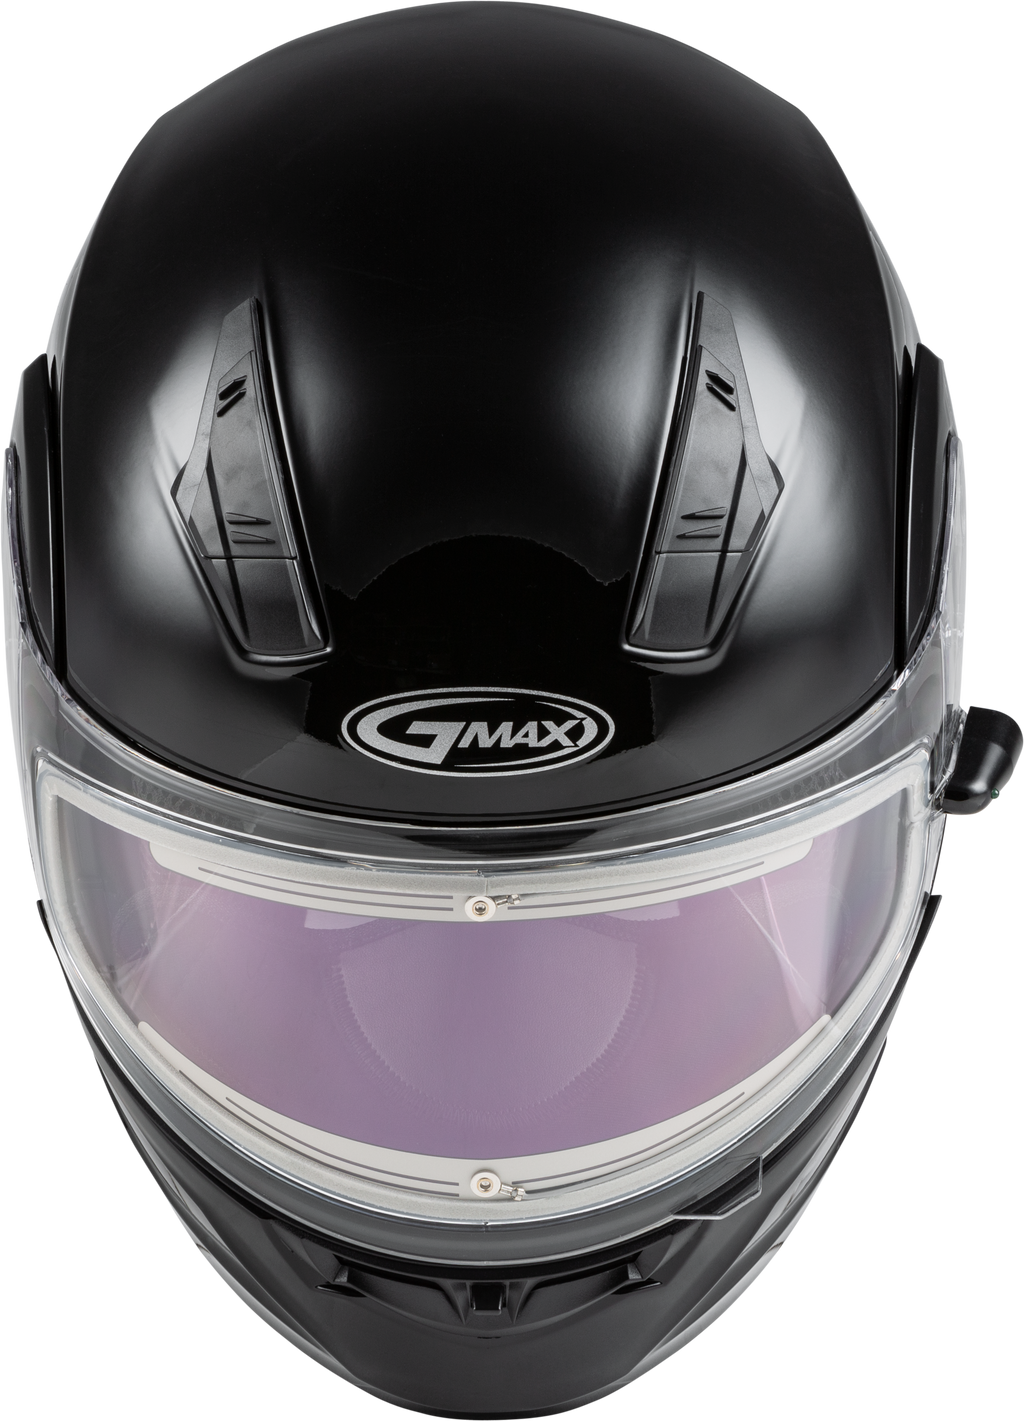 Md 04s Modular Snow Helmet W/Electric Shield Black Md